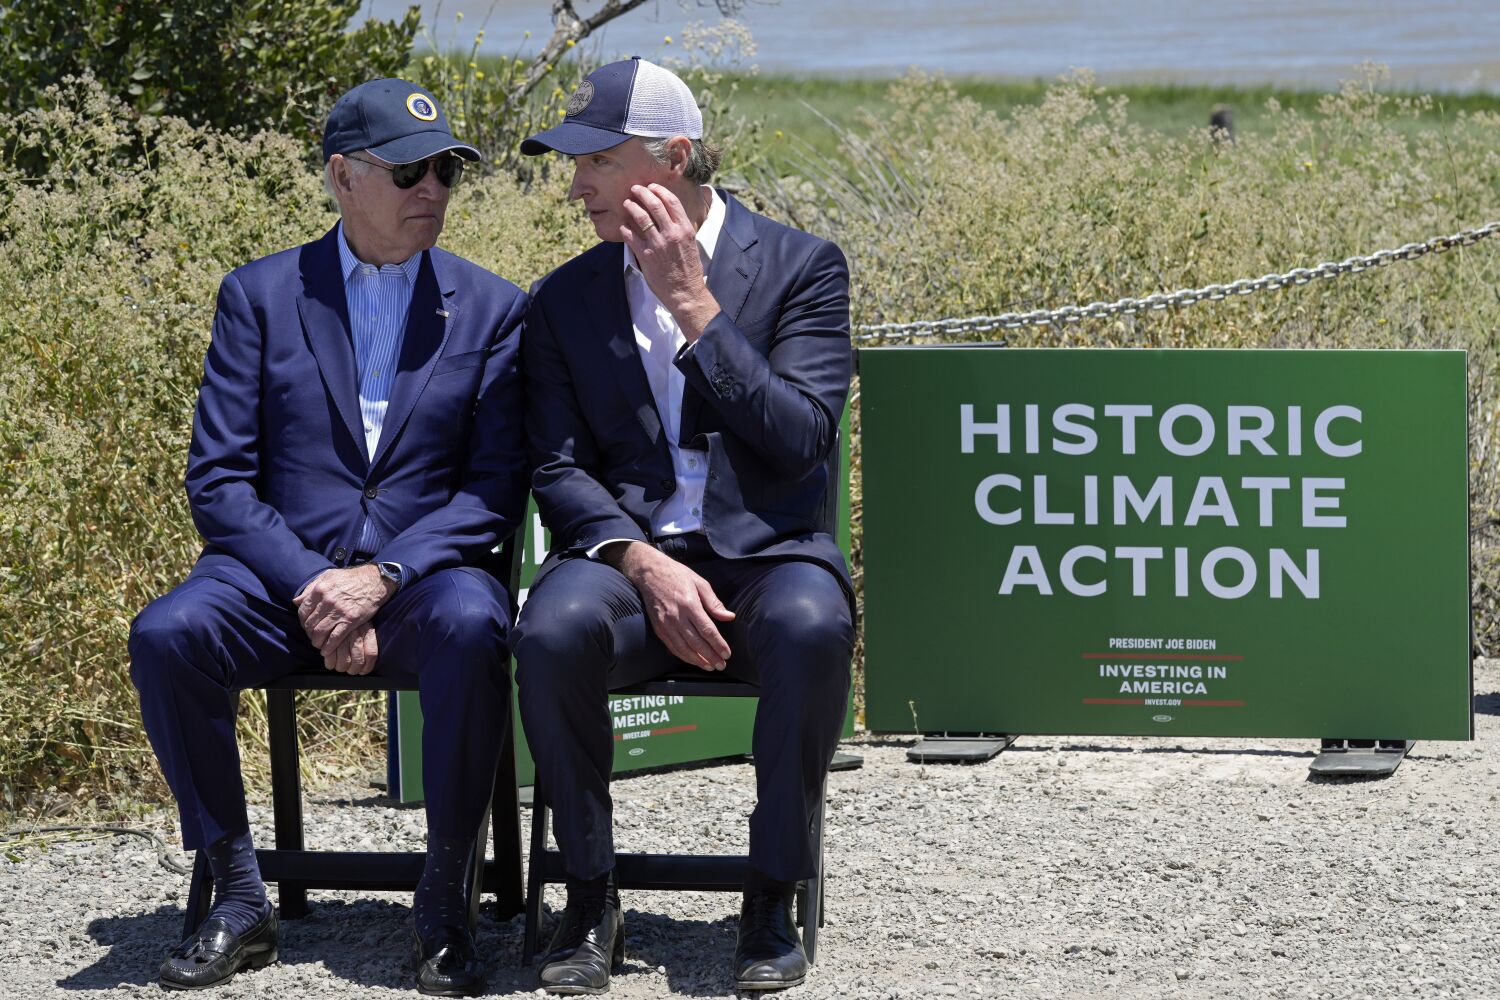 Biden announces funding to combat climate change, raises campaign money, during swing through California